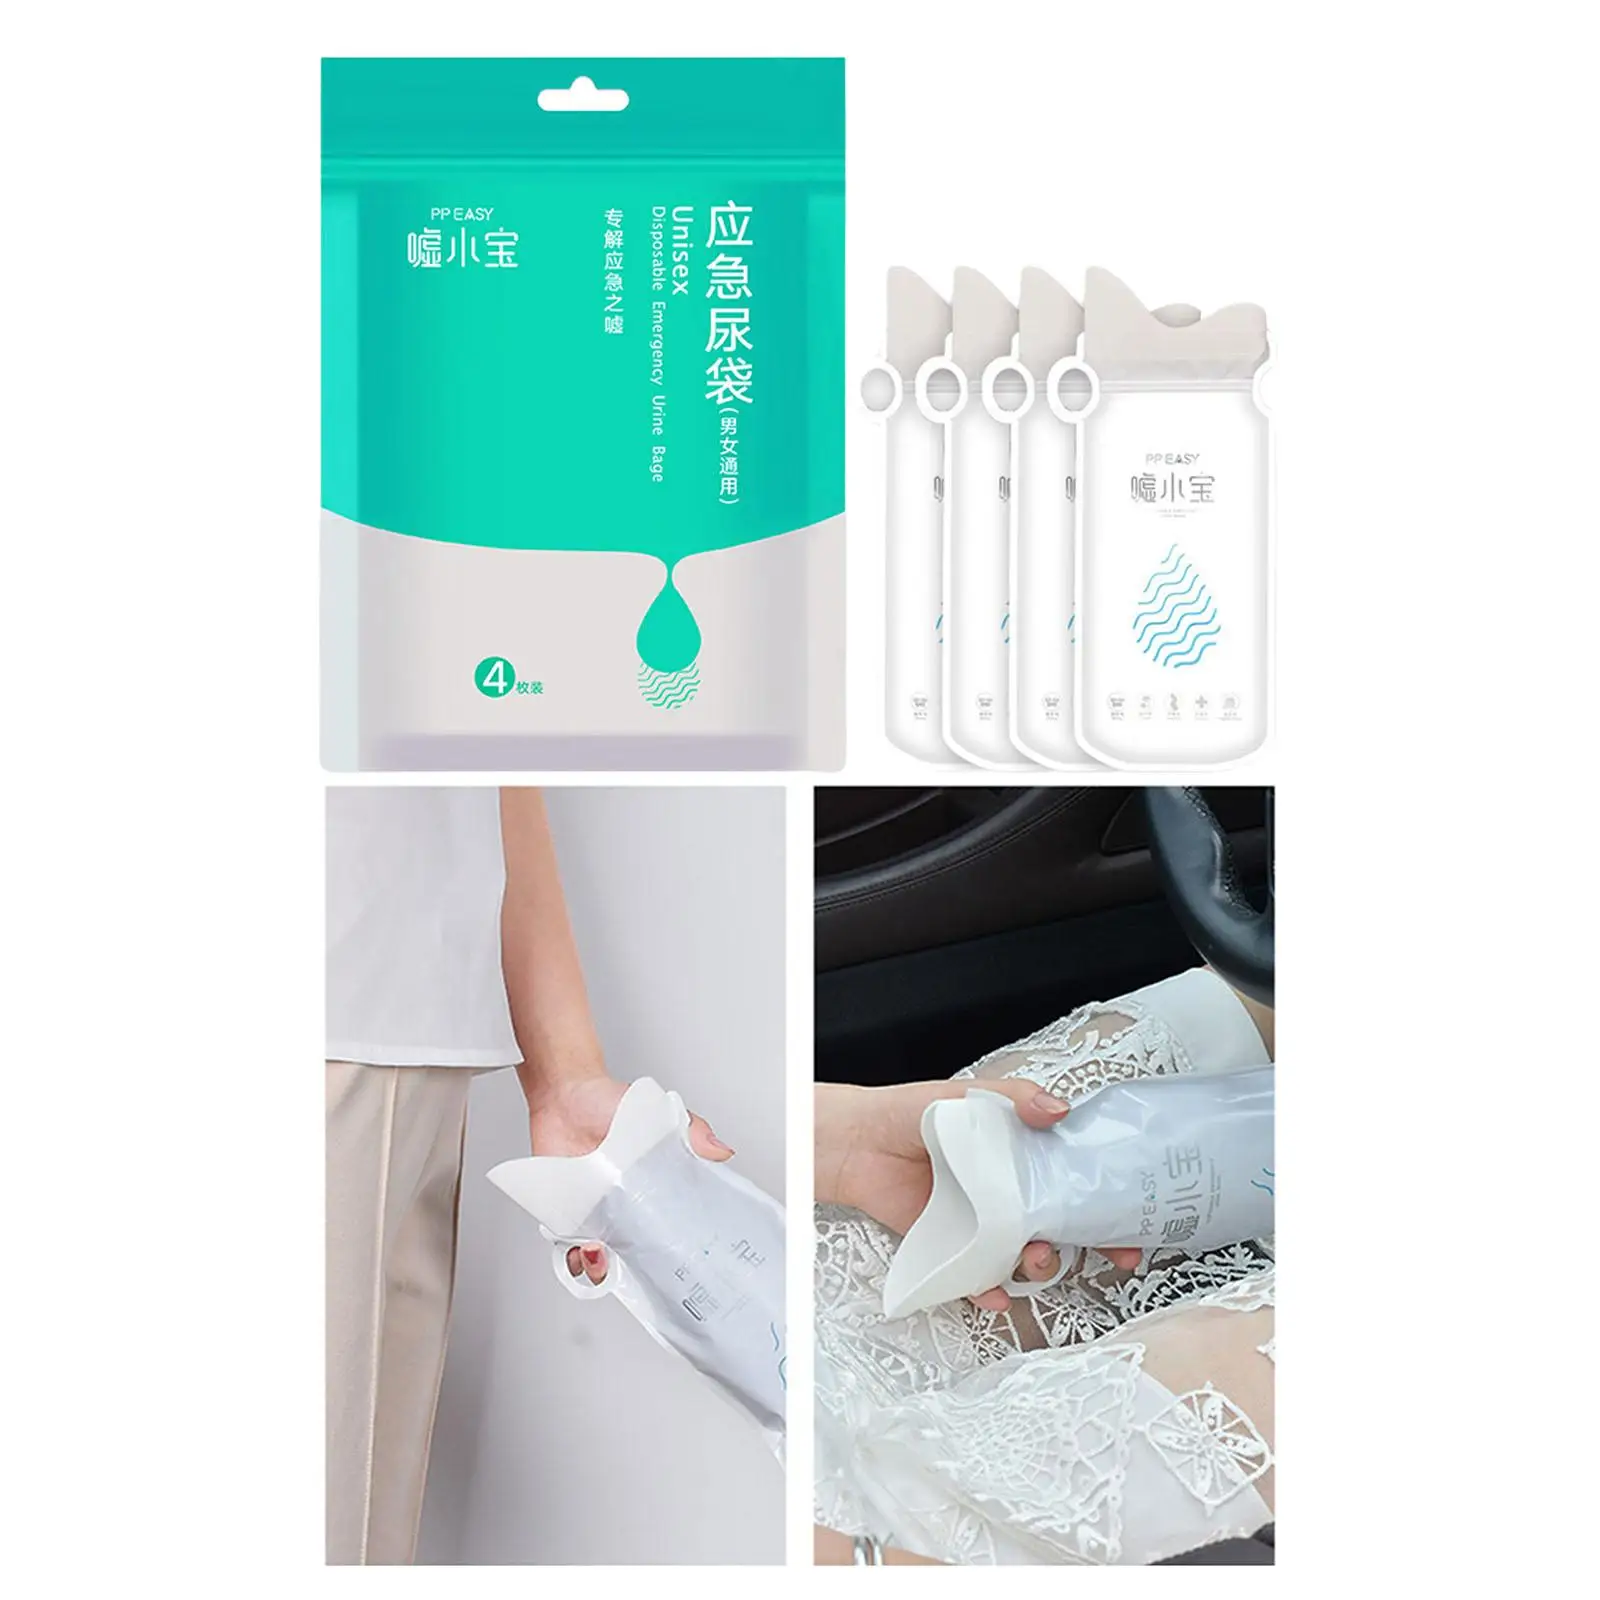 4x Portable Disposable Urinal Bags Unisex 700ml Vomit Bag Toilet Pee Bag for Camping Car Sickness Men Women Kids Patient